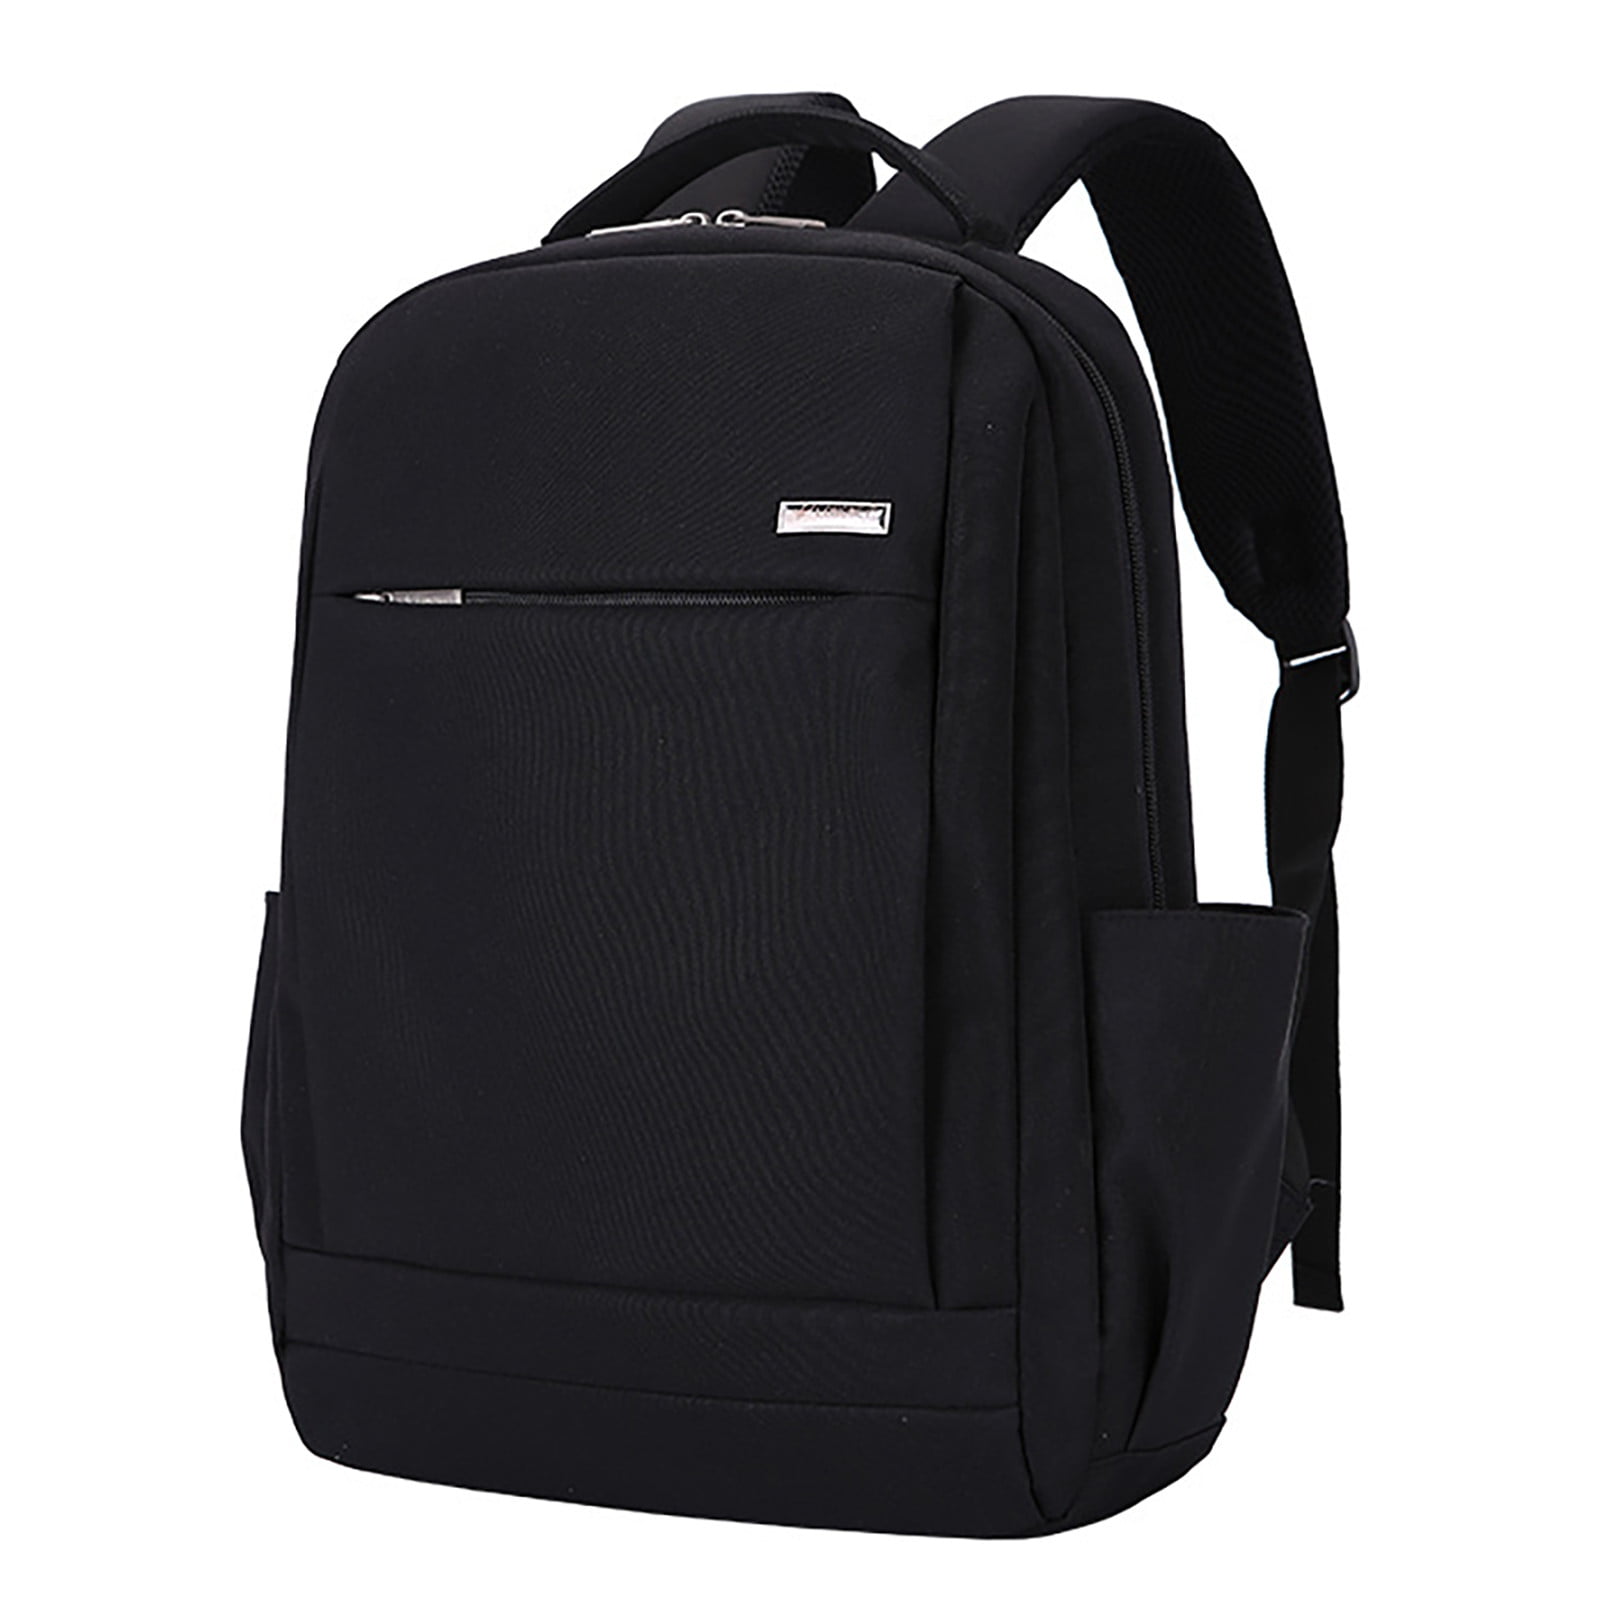 Cute Panda Backpack Large Laptop Travel Business Backpack Casual School Computer Bookbag 17 Inch 